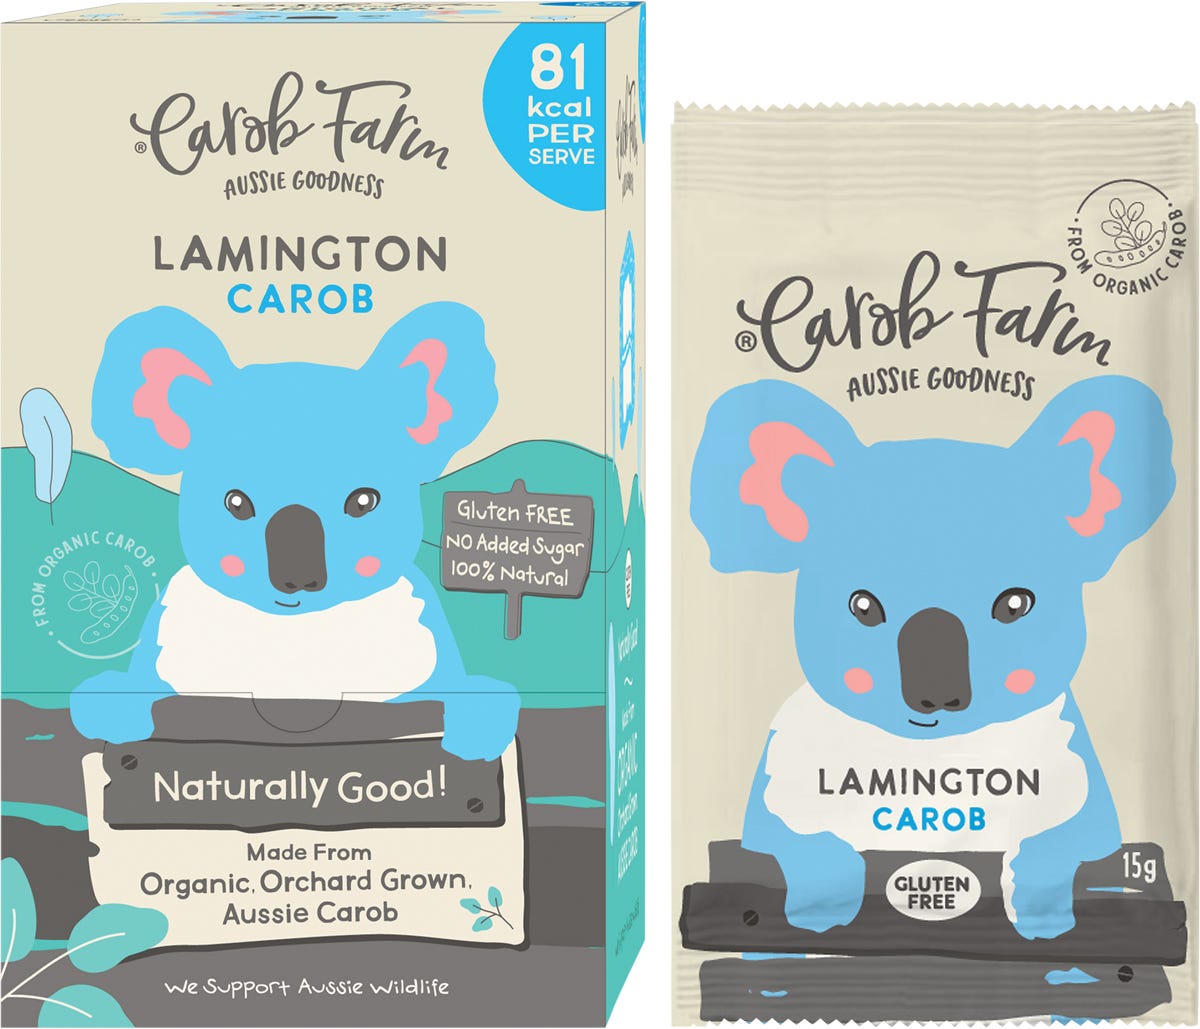 Carob Farm Carob Koala Lamington 15g - Dr Earth - Chocolate & Carob